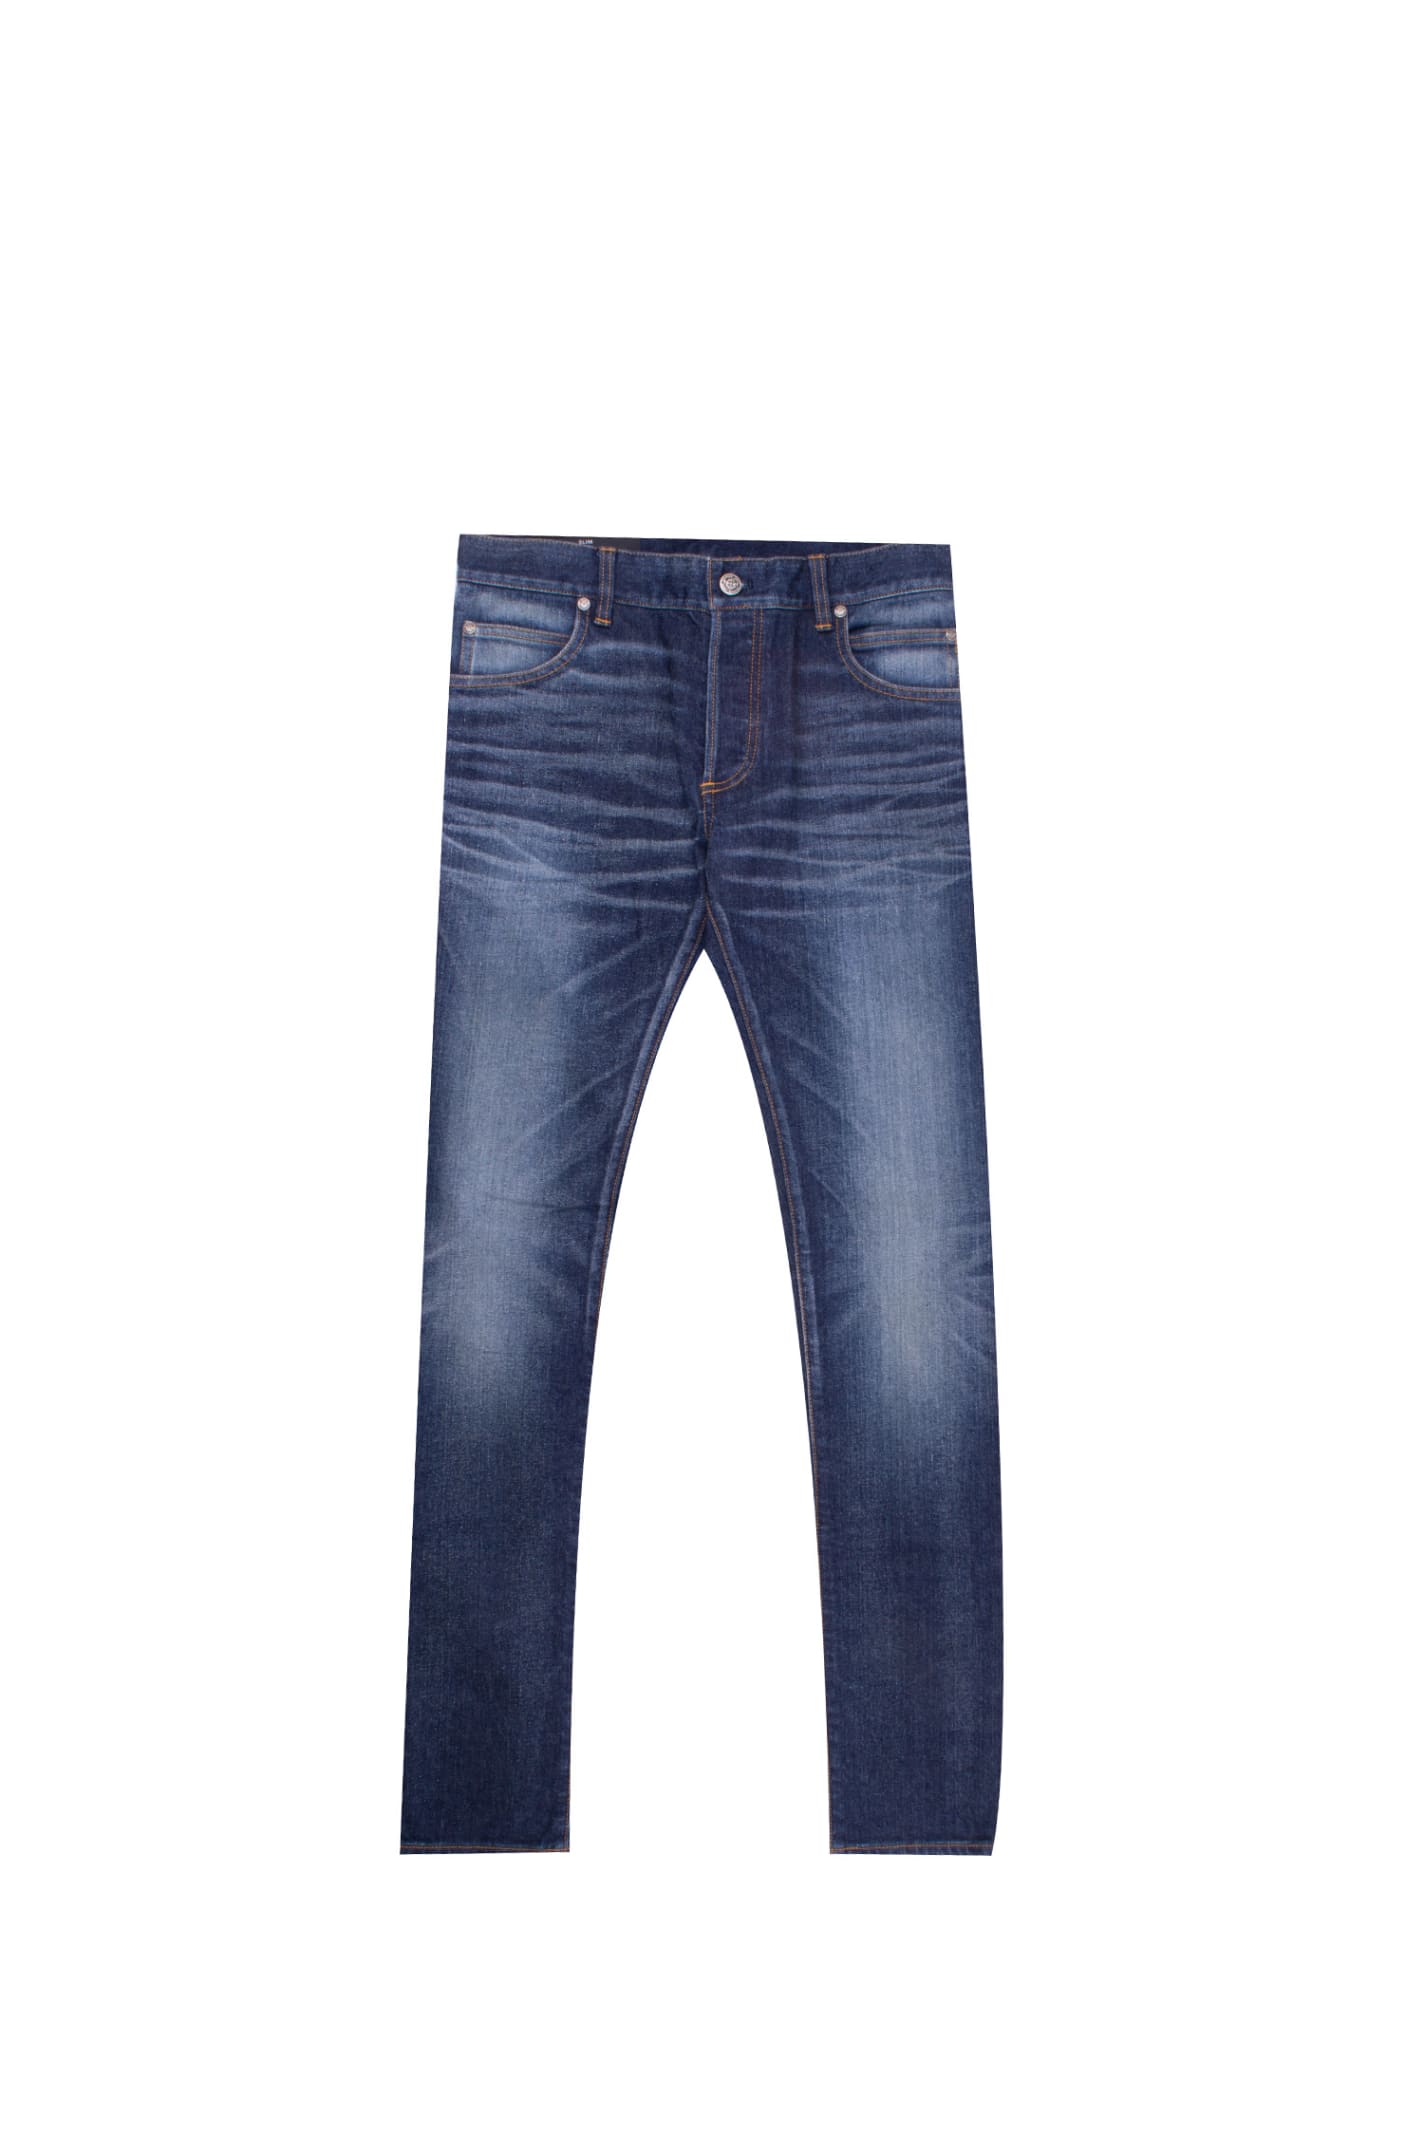 Balmain Cotton Jeans